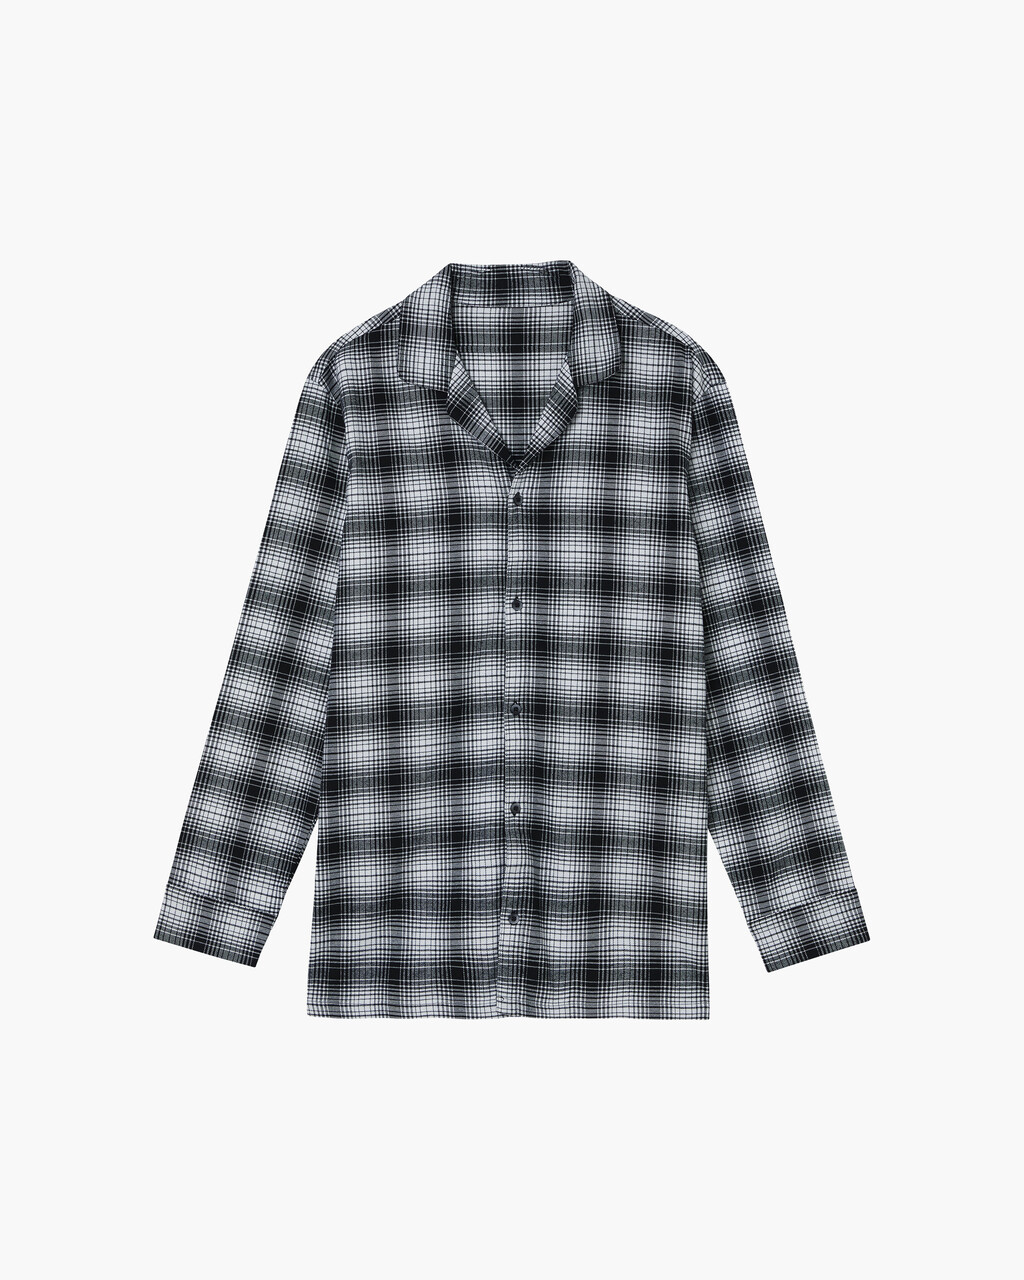 Flannel Long Sleeve Button Down Shirt, CK Shadow Plaid+Black, hi-res